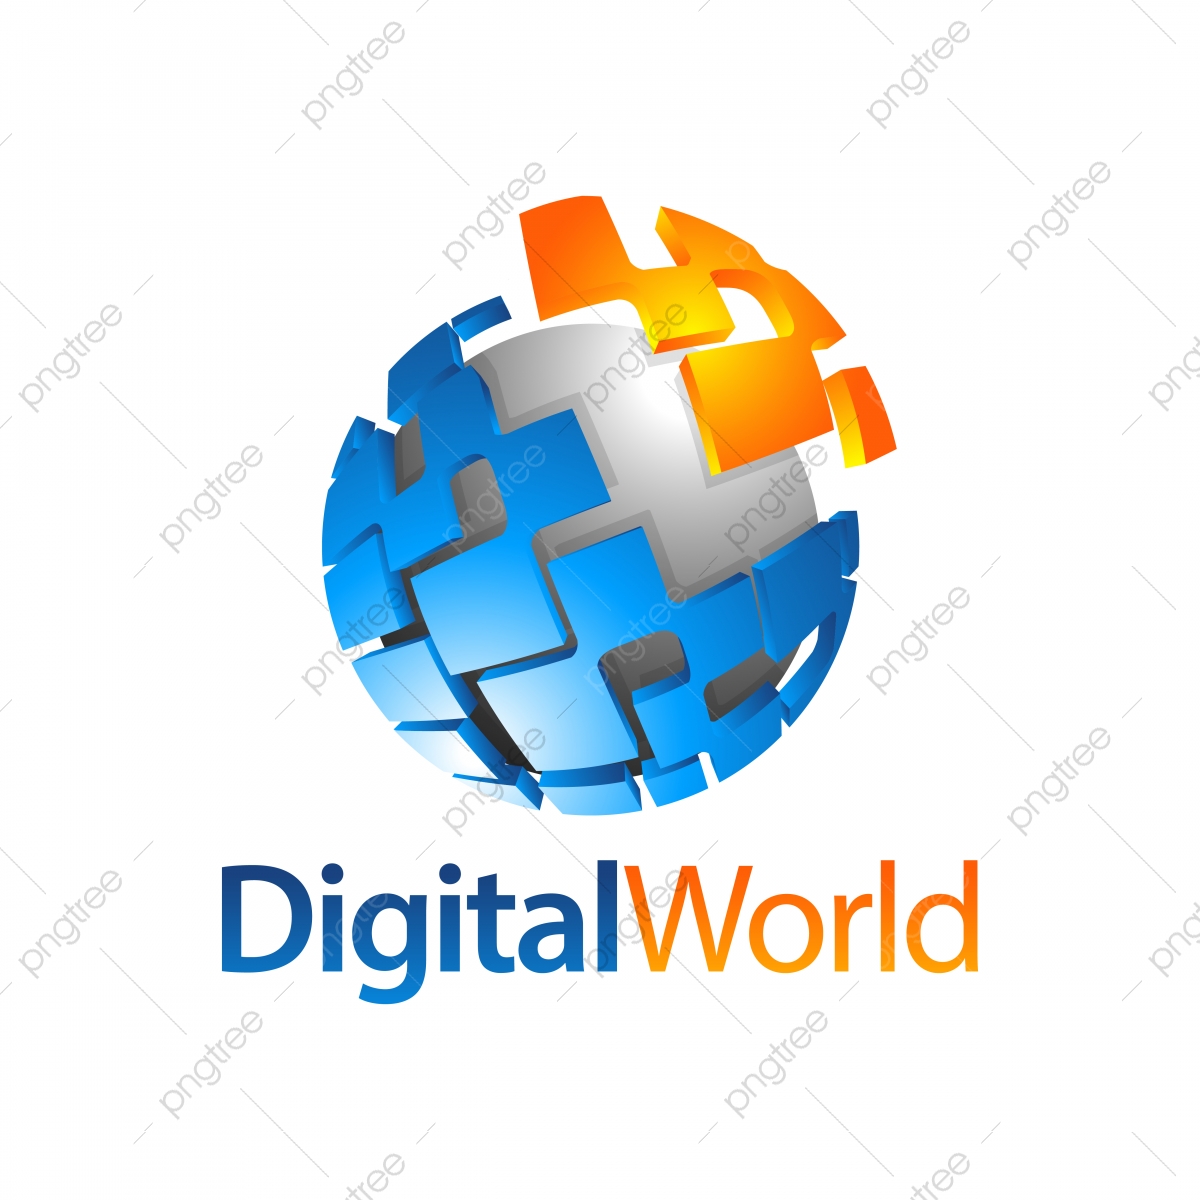 Digital World 